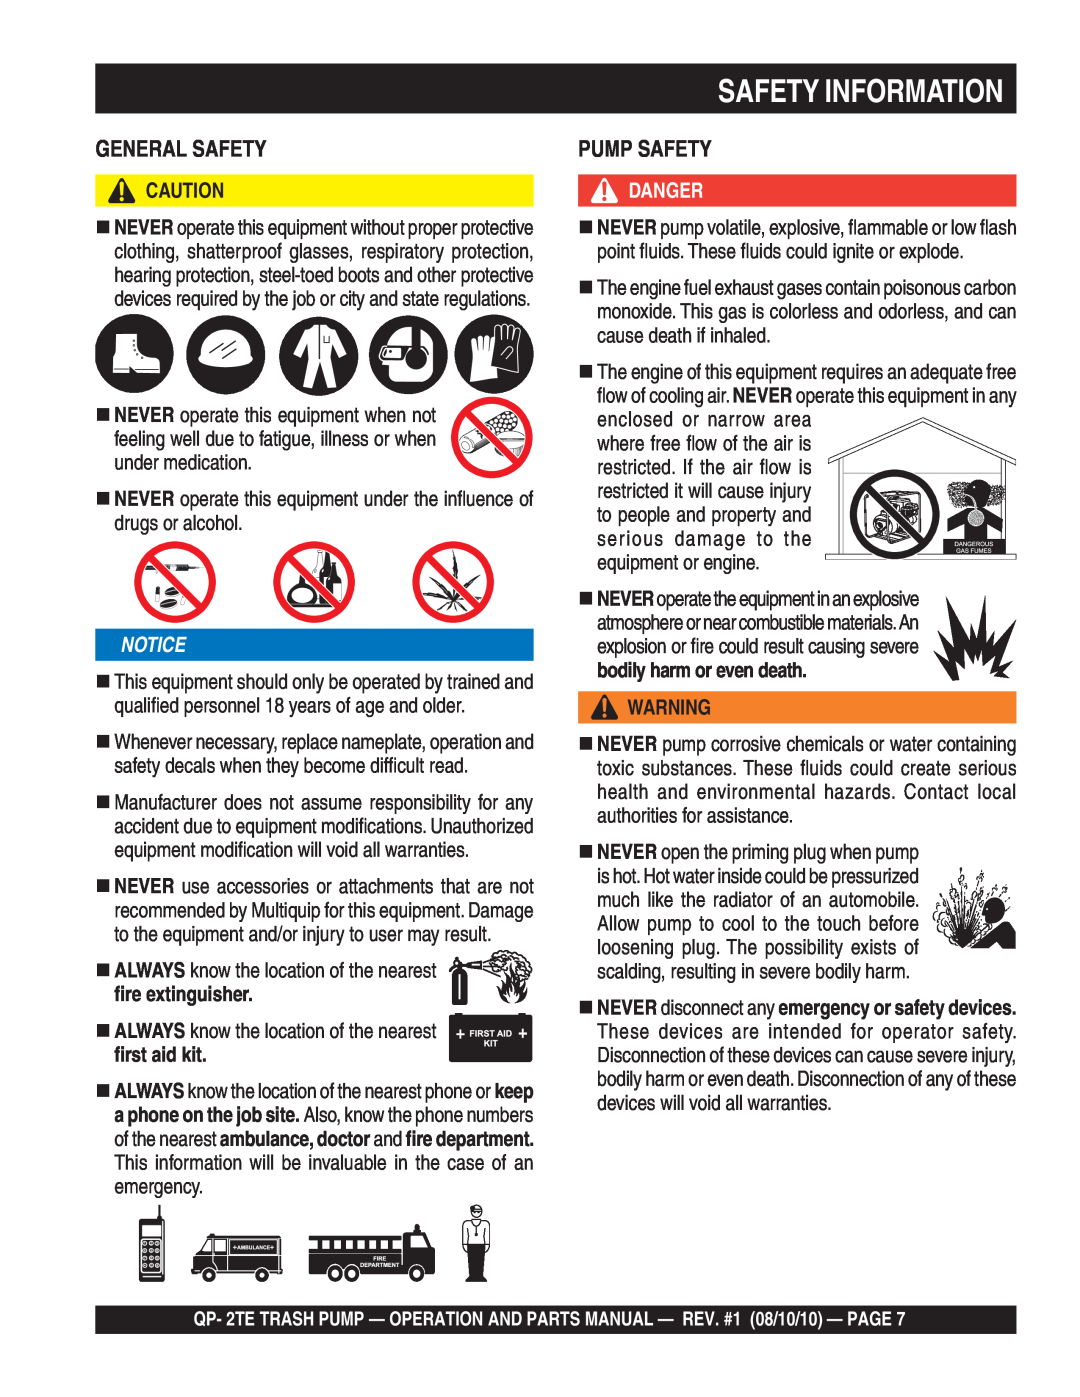 Multiquip Qp-2TE manual General Safety, Pump Safety, ﬁre extinguisher, ﬁrst aid kit, Safety Information, Danger 